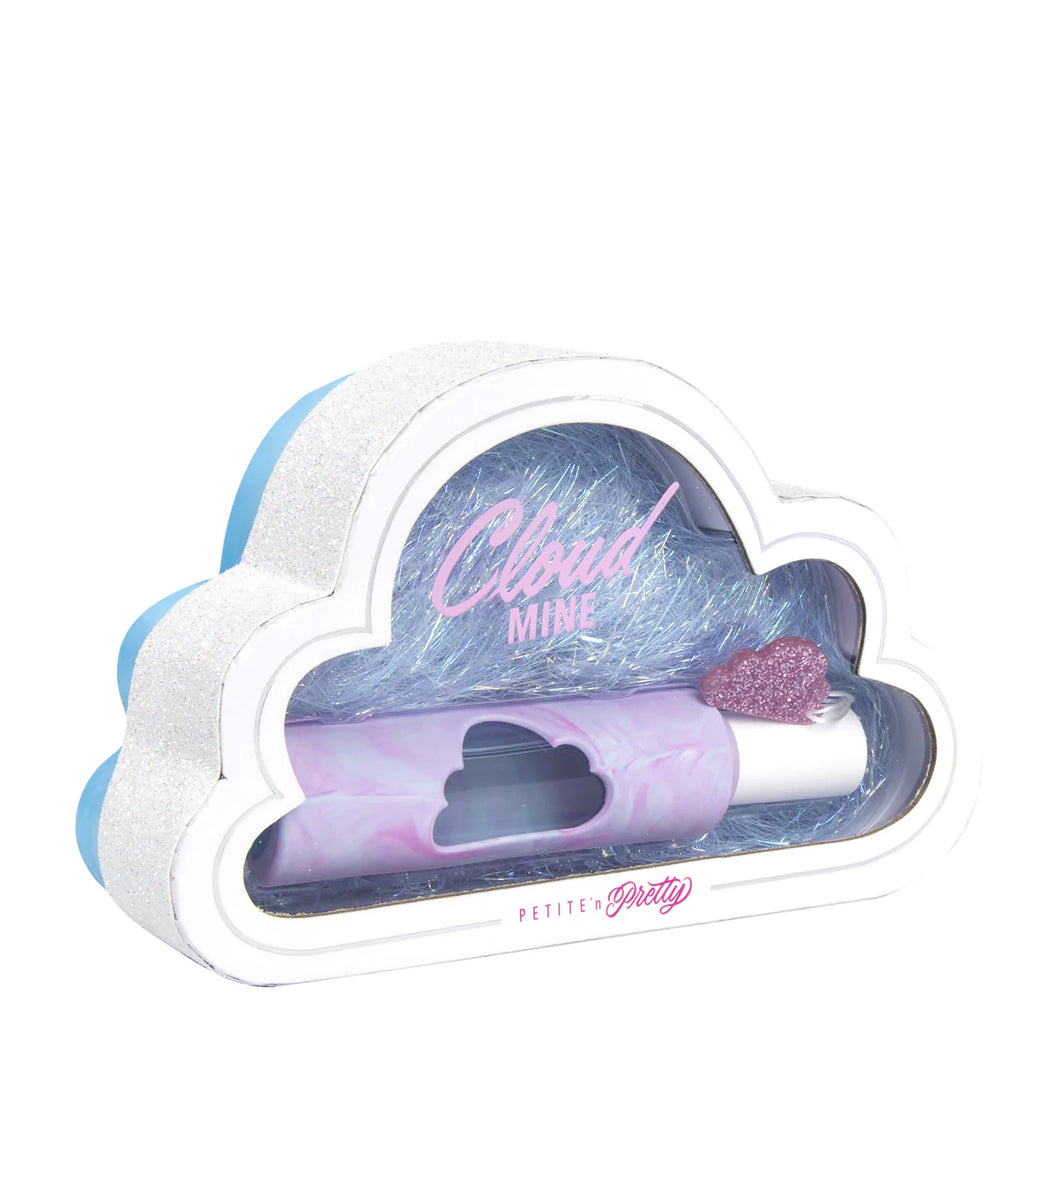 Petite N Pretty Cloud Mine™ Fragrance Rollerball